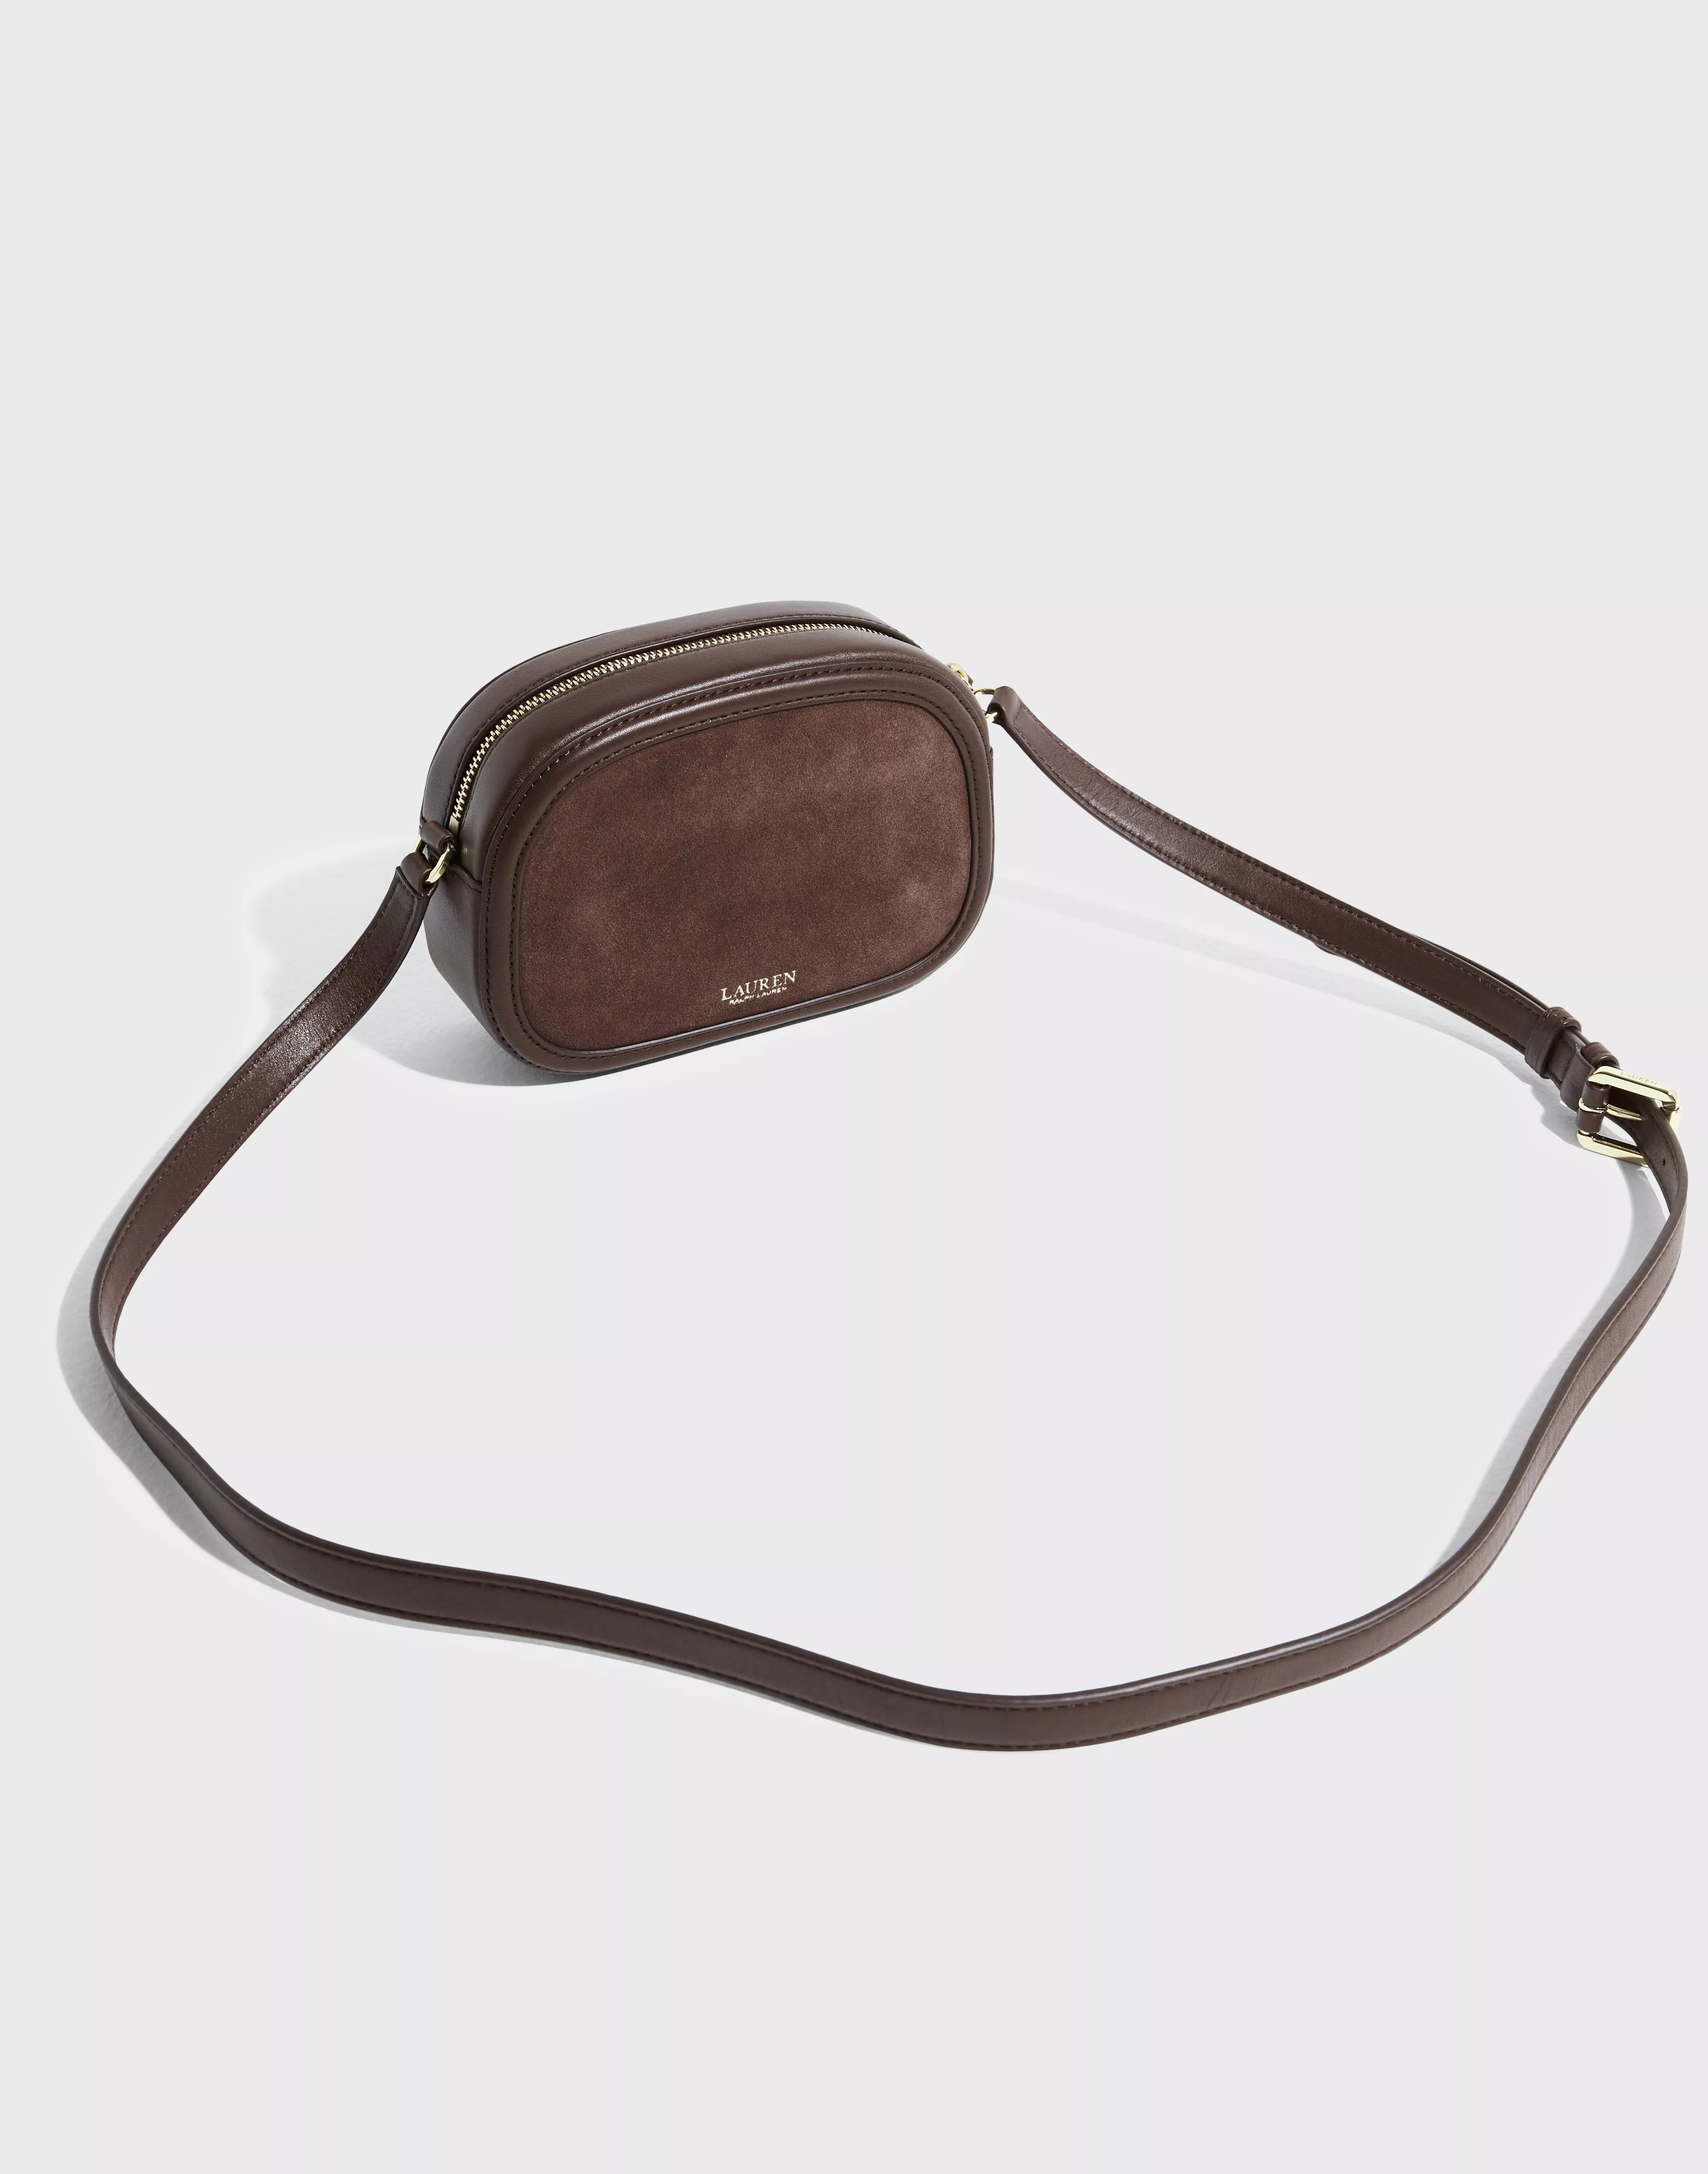 Lauren Ralph Lauren Jordynn Medium Leather Crossbody Bag